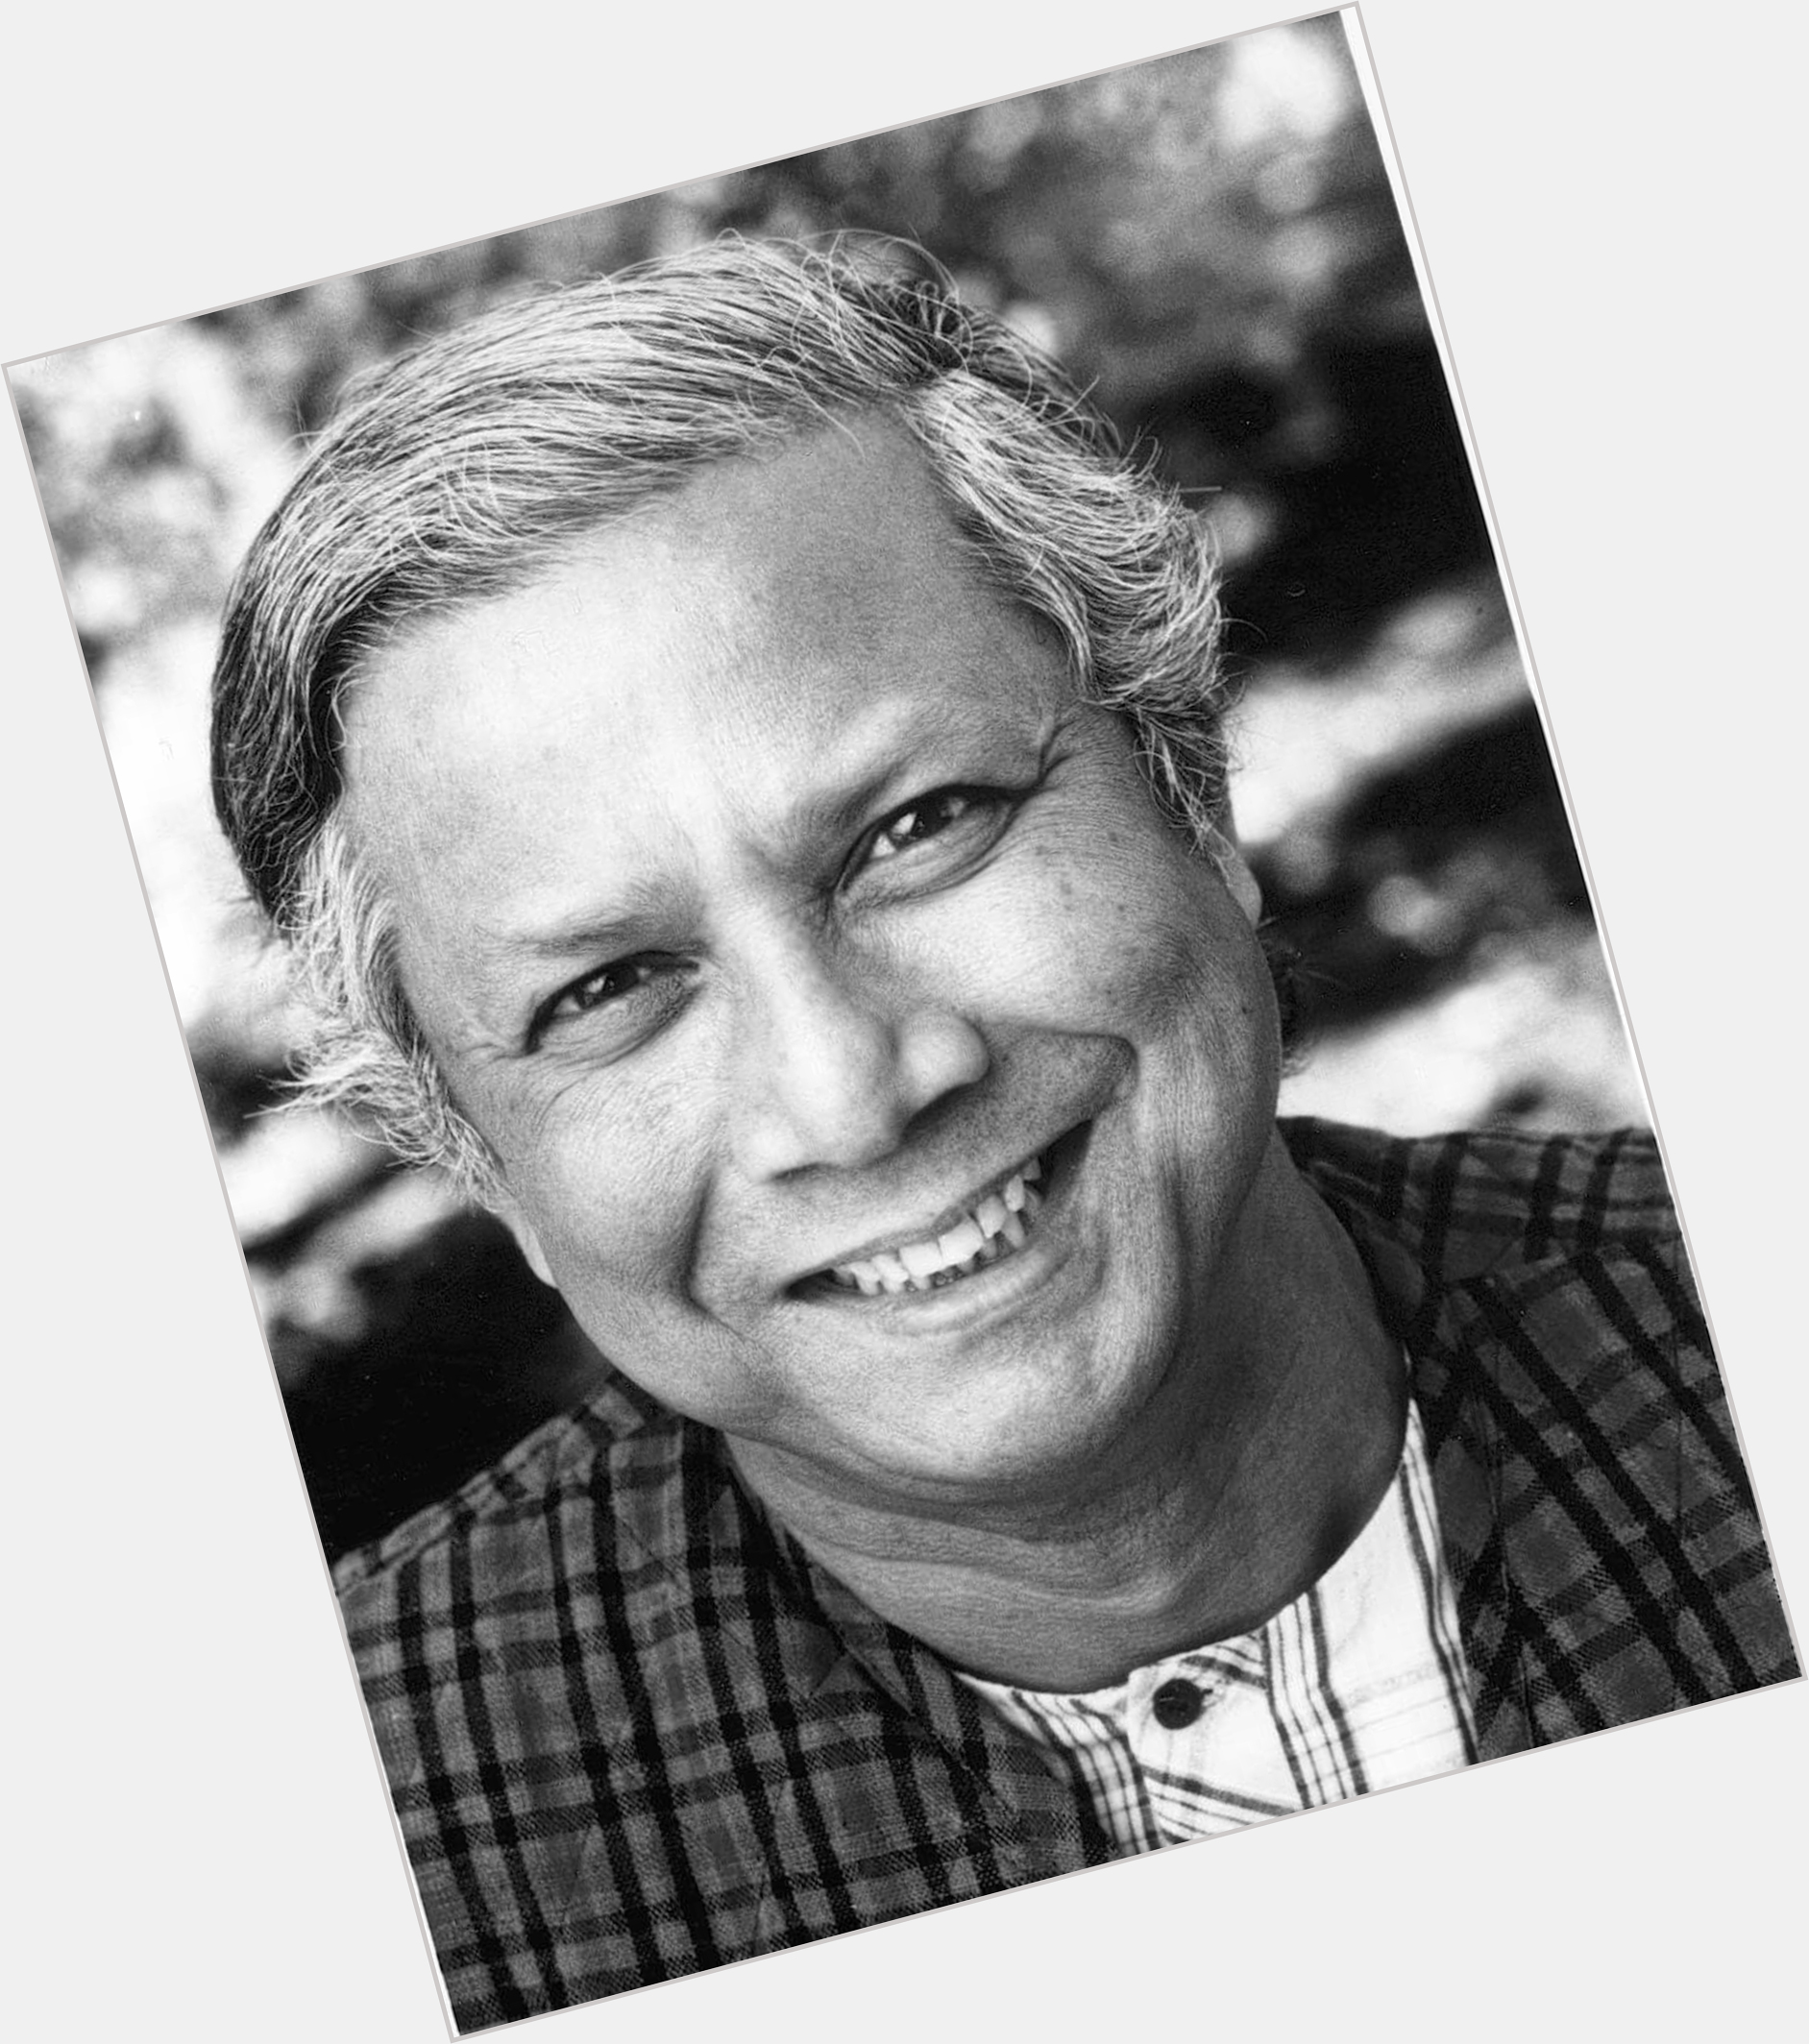 Http://fanpagepress.net/m/M/Muhammad Yunus Dating 2